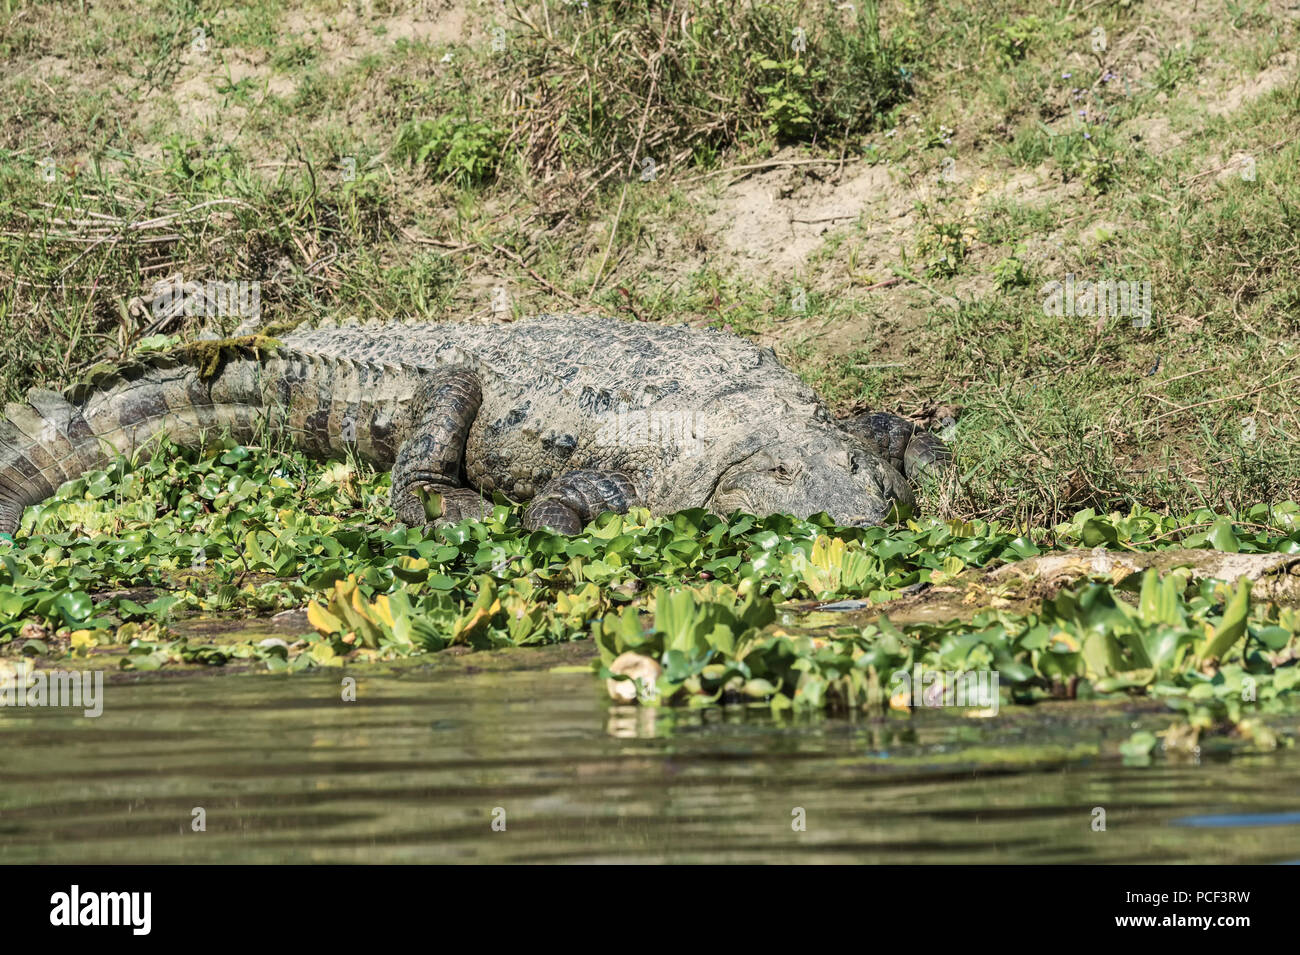 Mugger crocodile (Crocodylus palustris) or Marsh Crocodile on a riverbank, Chitwan National Park, UNESCO World Heritage Site, Nepal Stock Photo